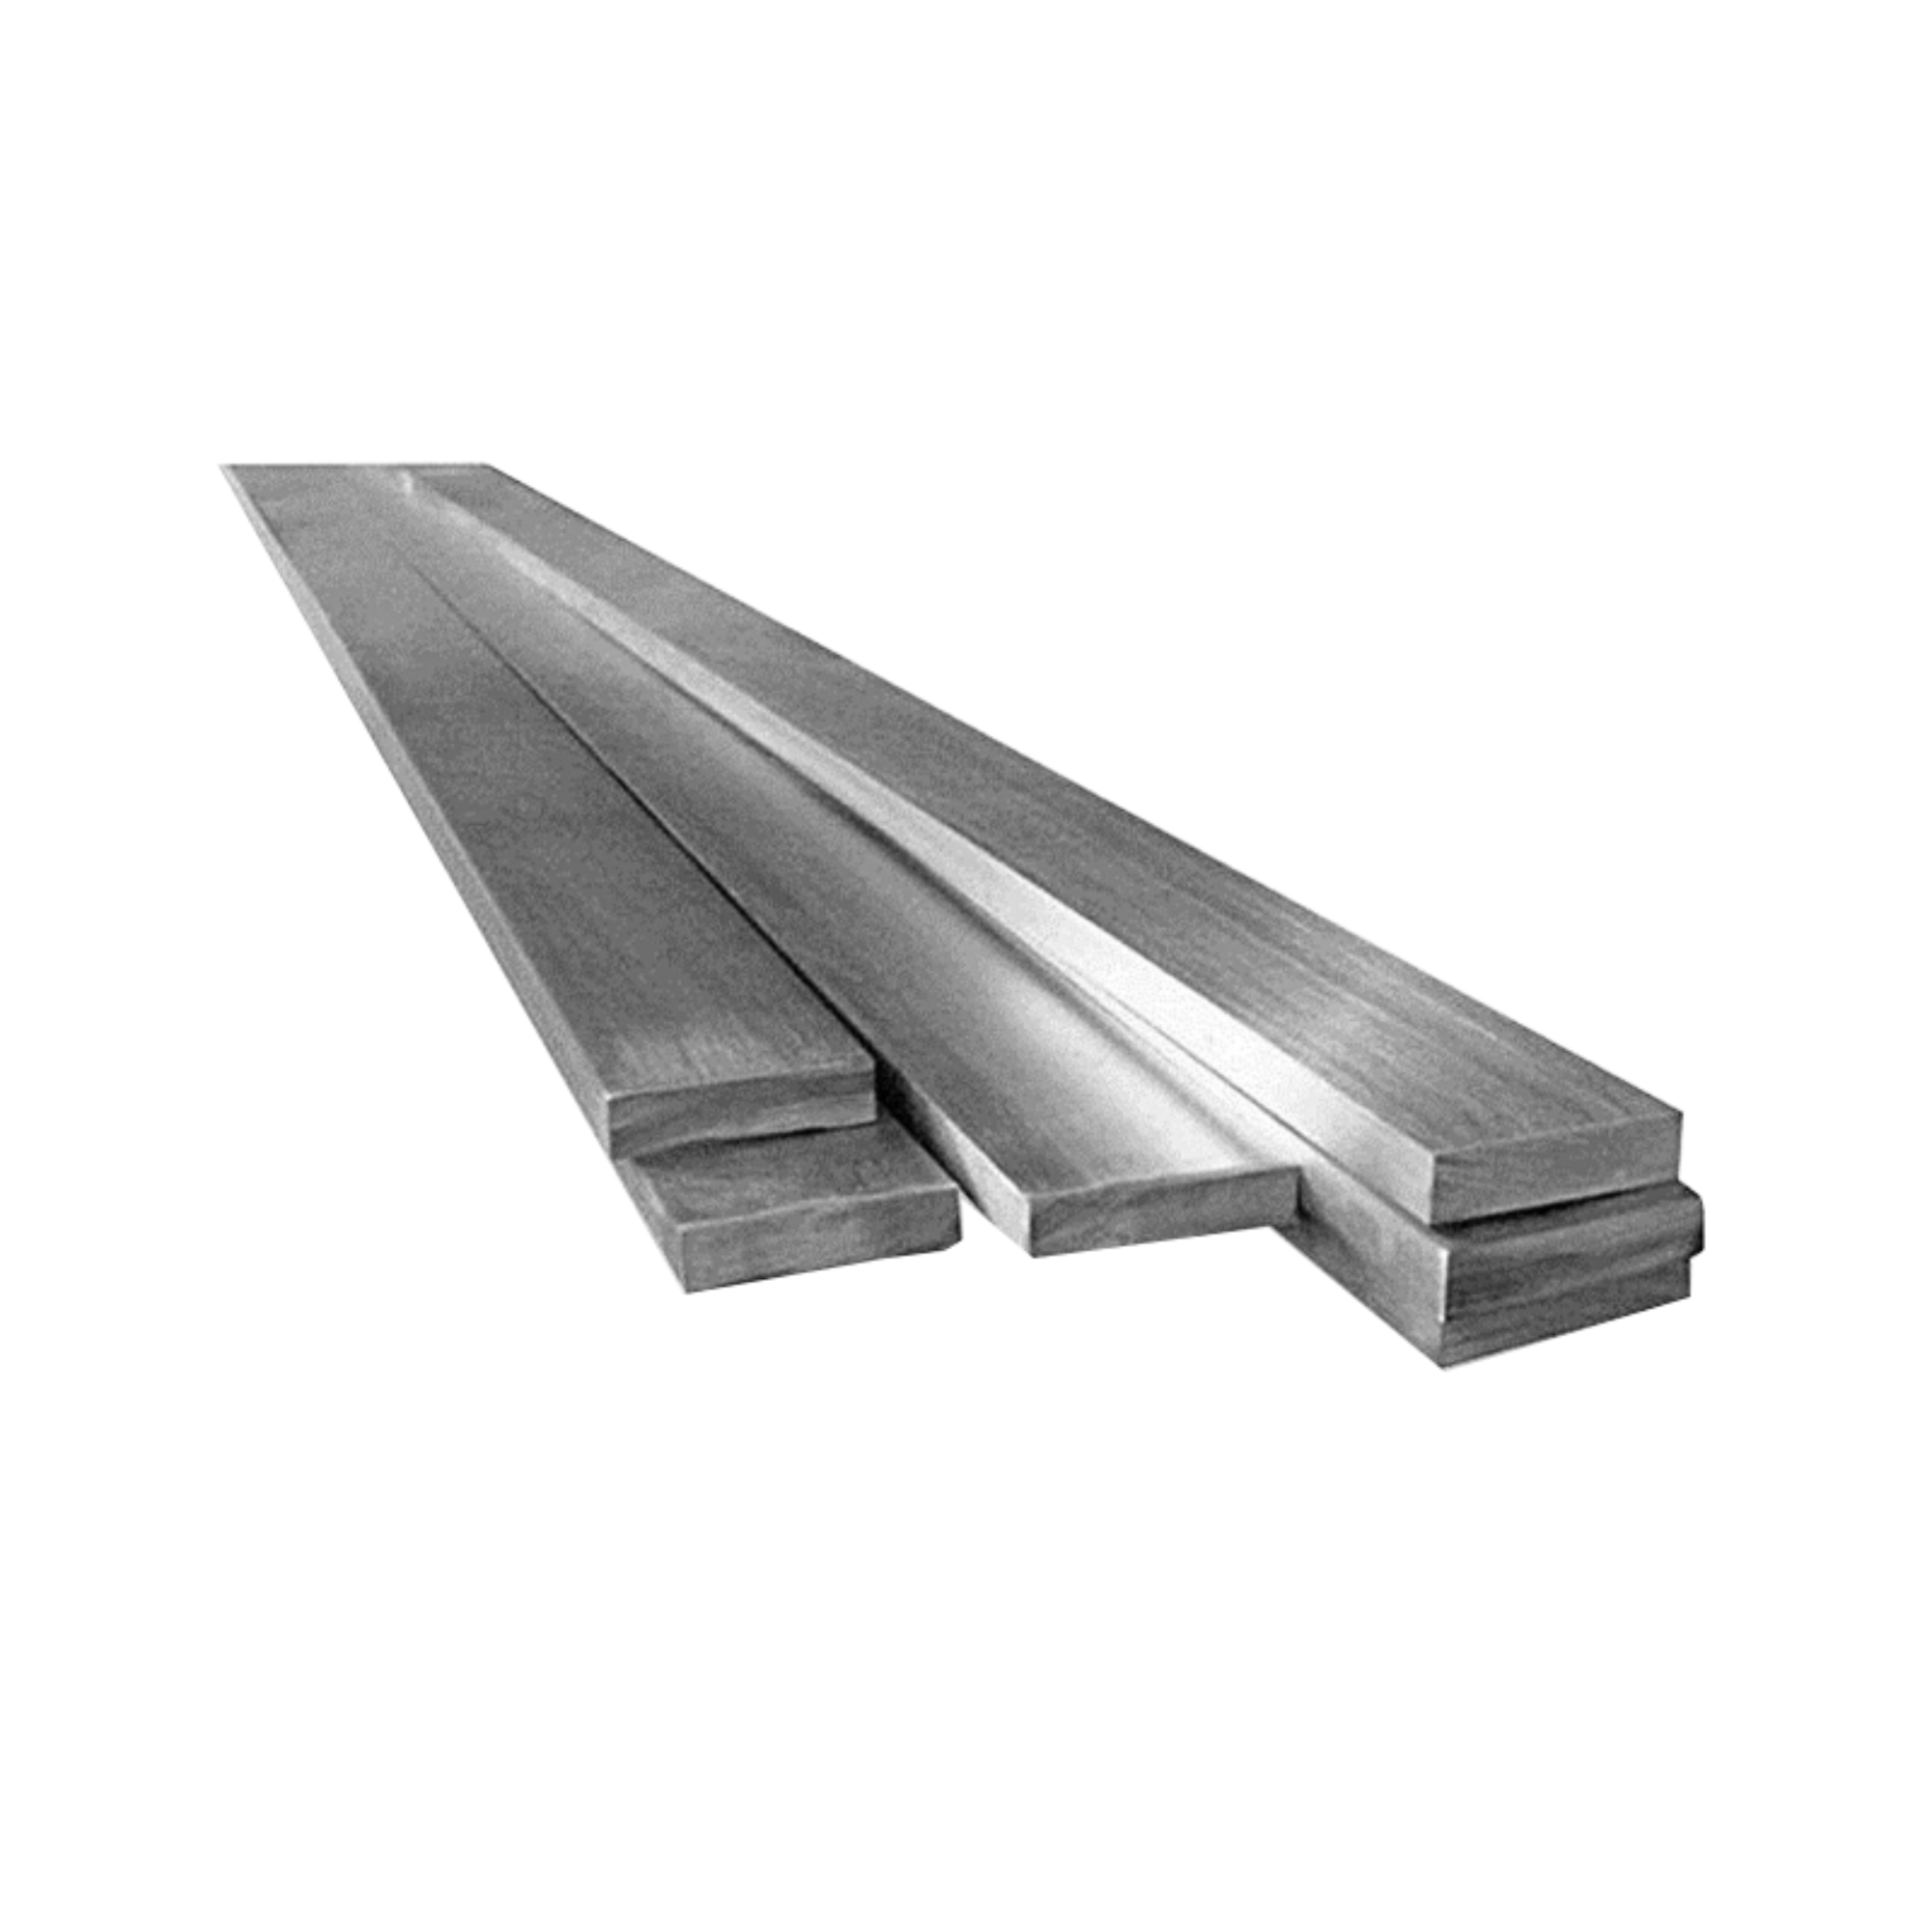 Stainless Steel Plate C-4 C-276 C-30 C-35 8810 625 2507 904L B-2 B-3 C-200 S32760/F55 253mA Monel 400 Inconel 617 625 1J22